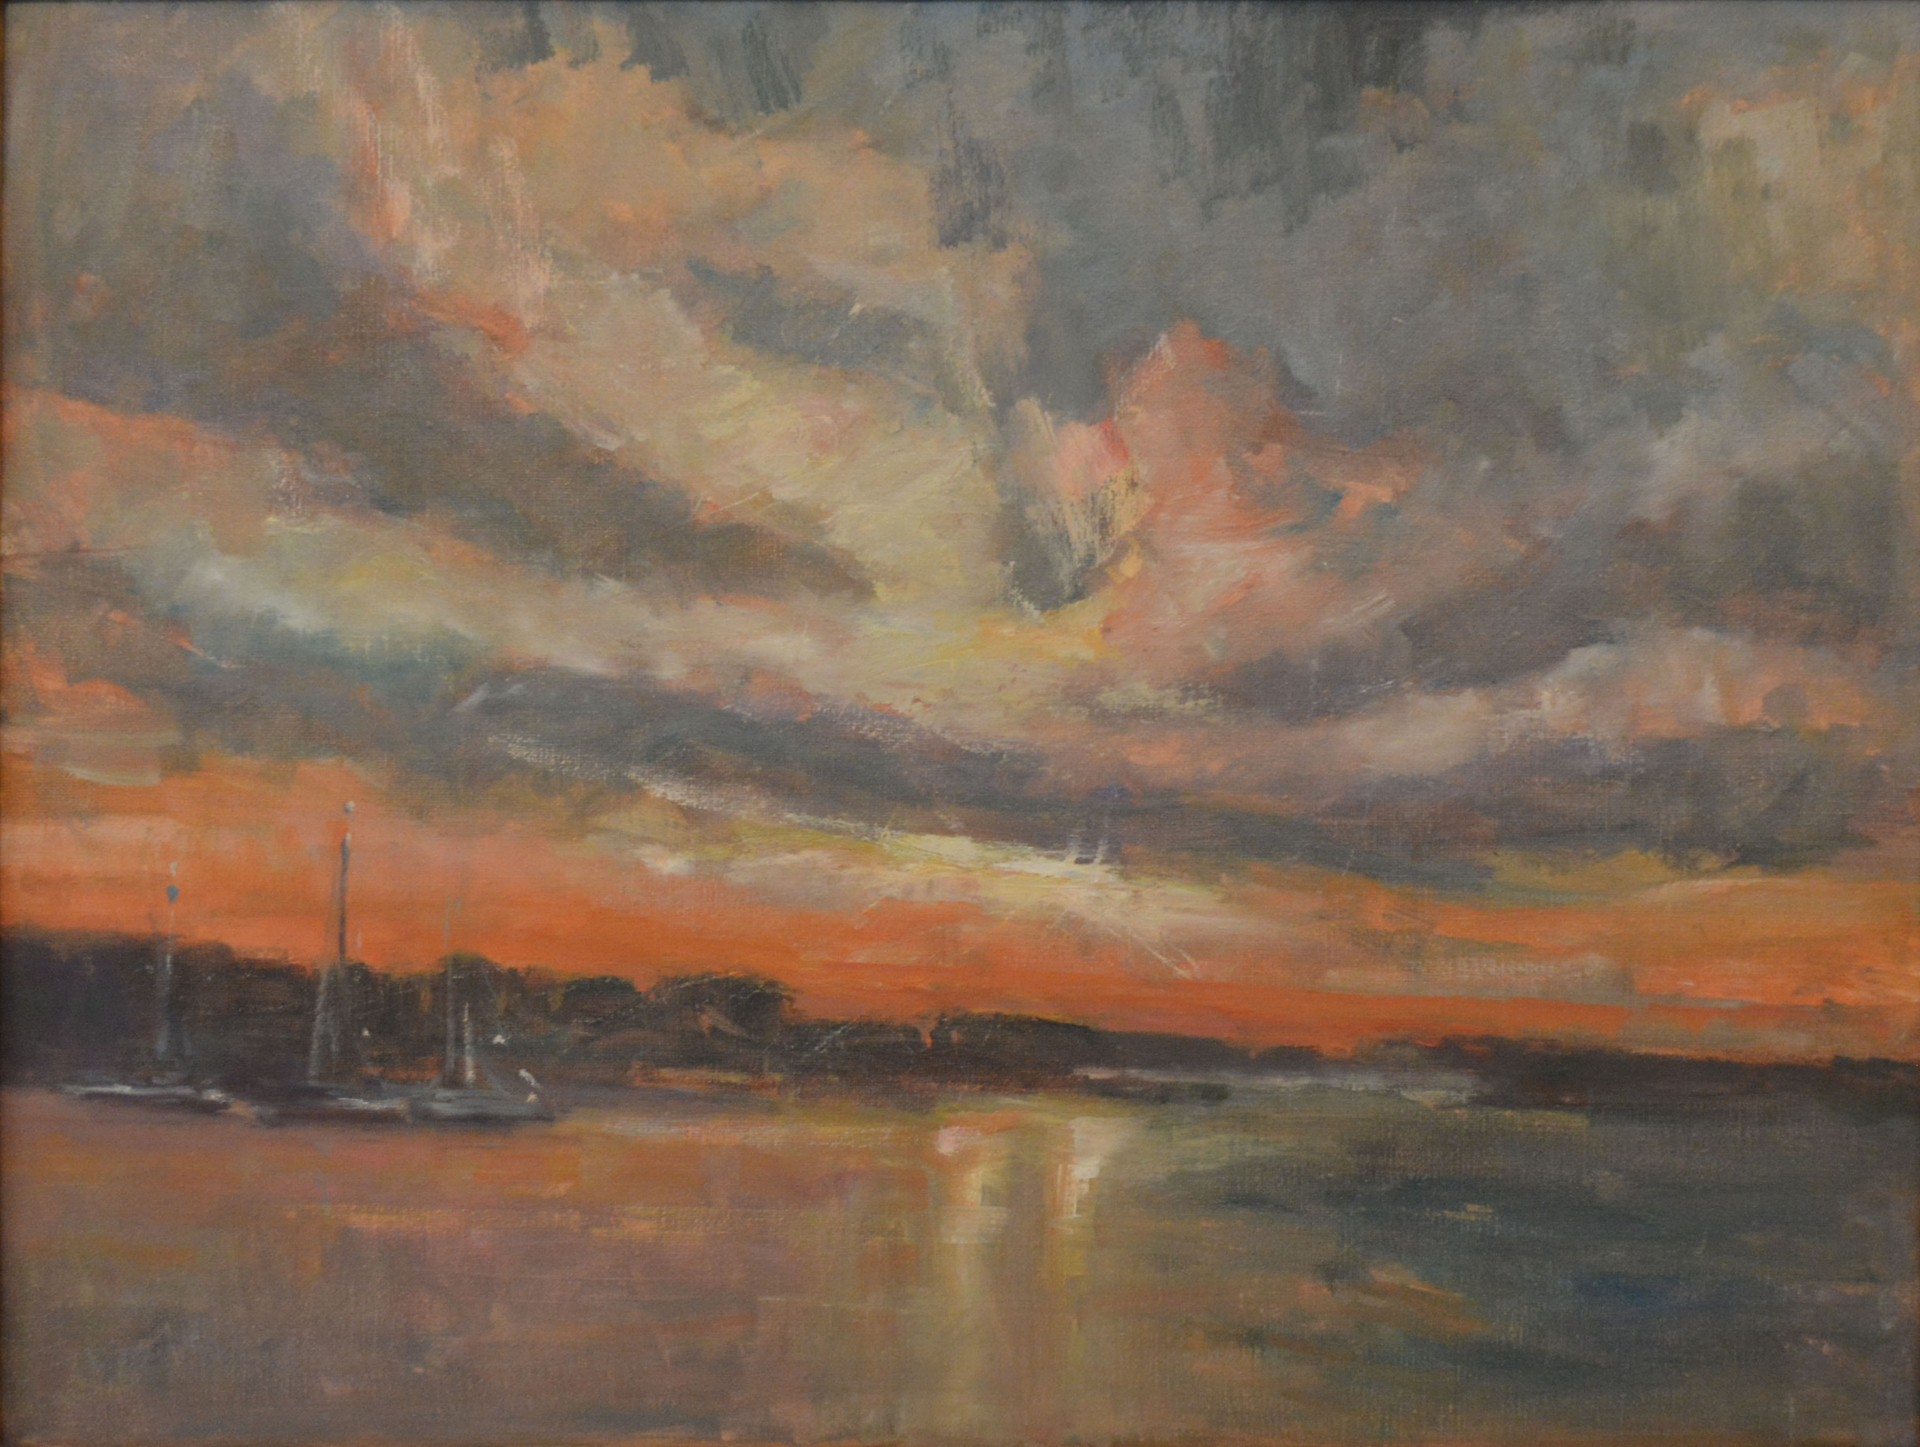 Early Light on the Harbor by Karen Hewitt Hagan